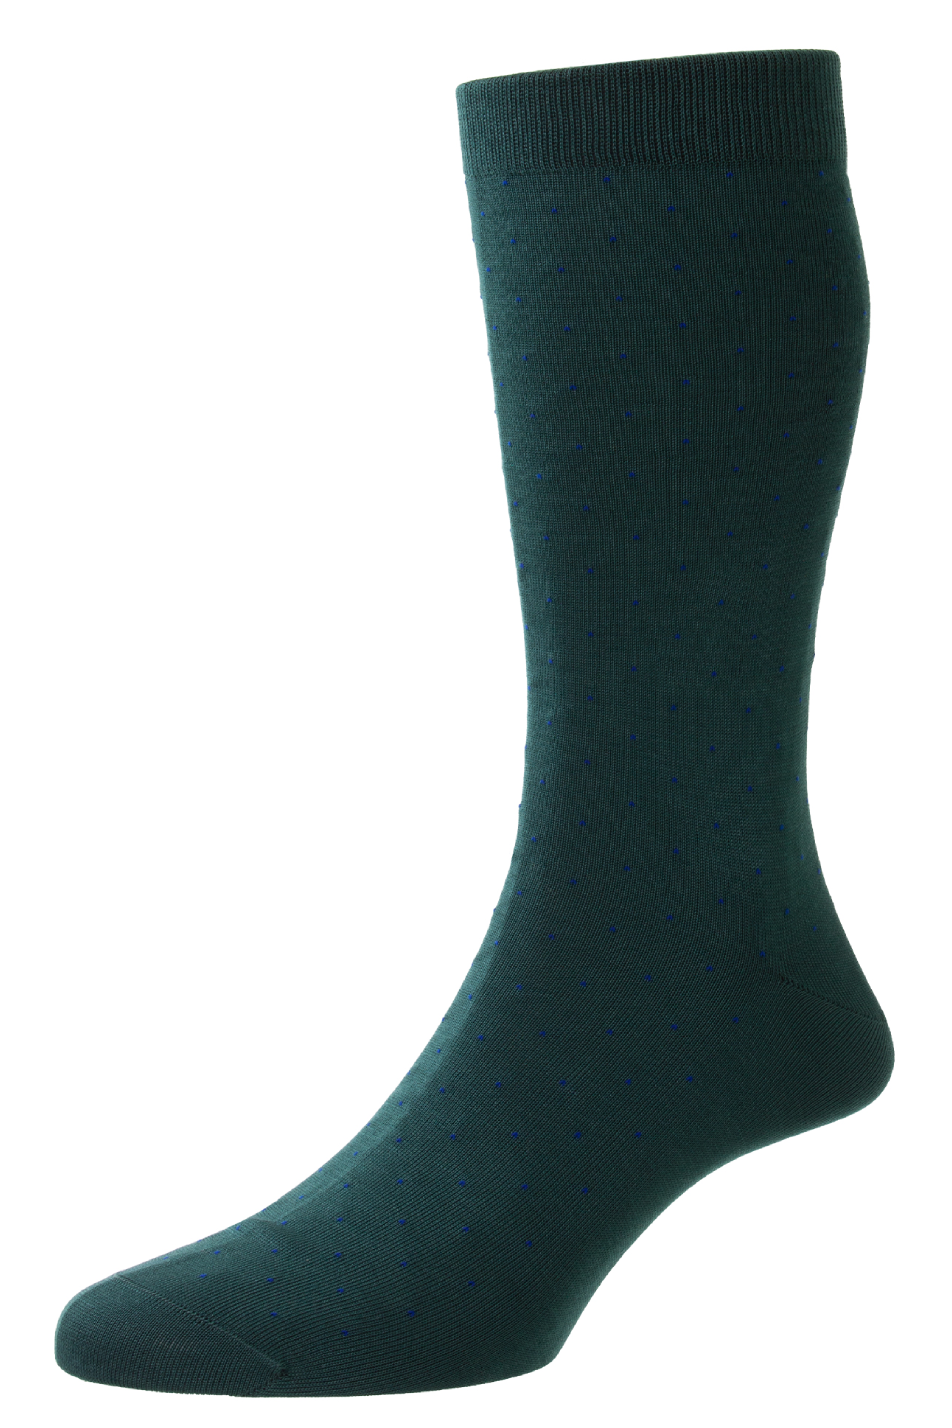 Pantherella Men's Gadsbury Pindot Sock